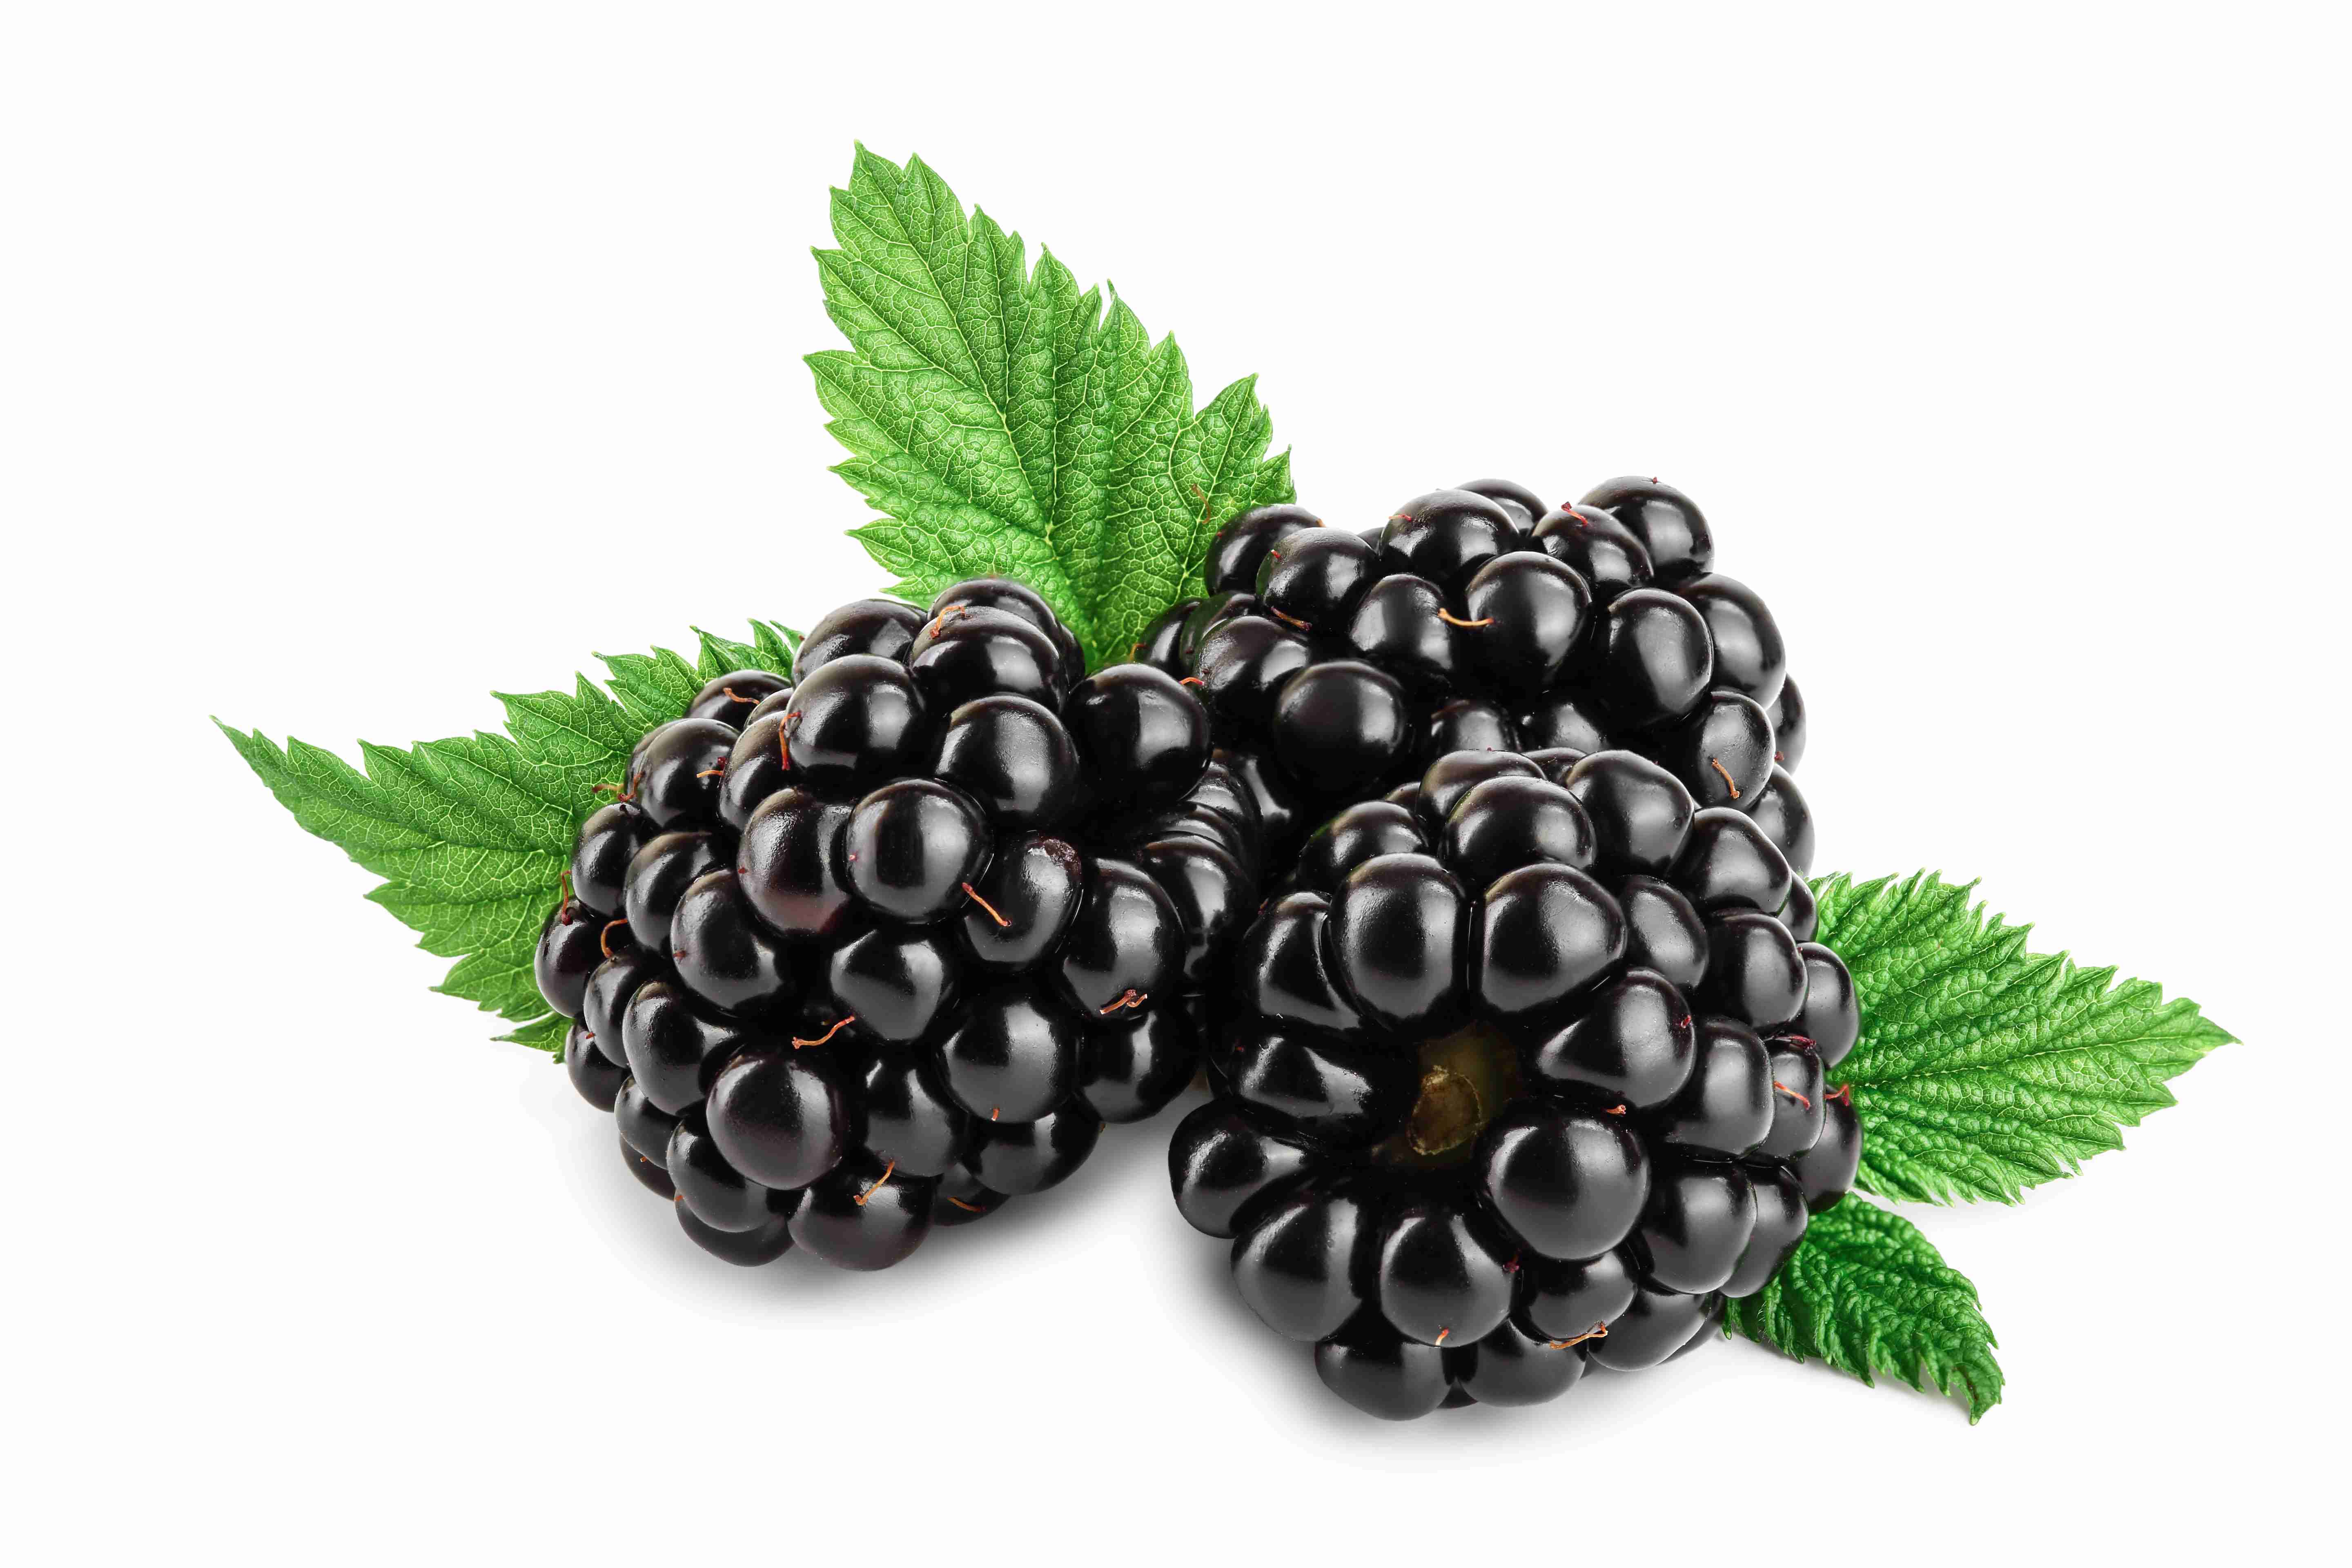 3 superb blackberries on green foliage